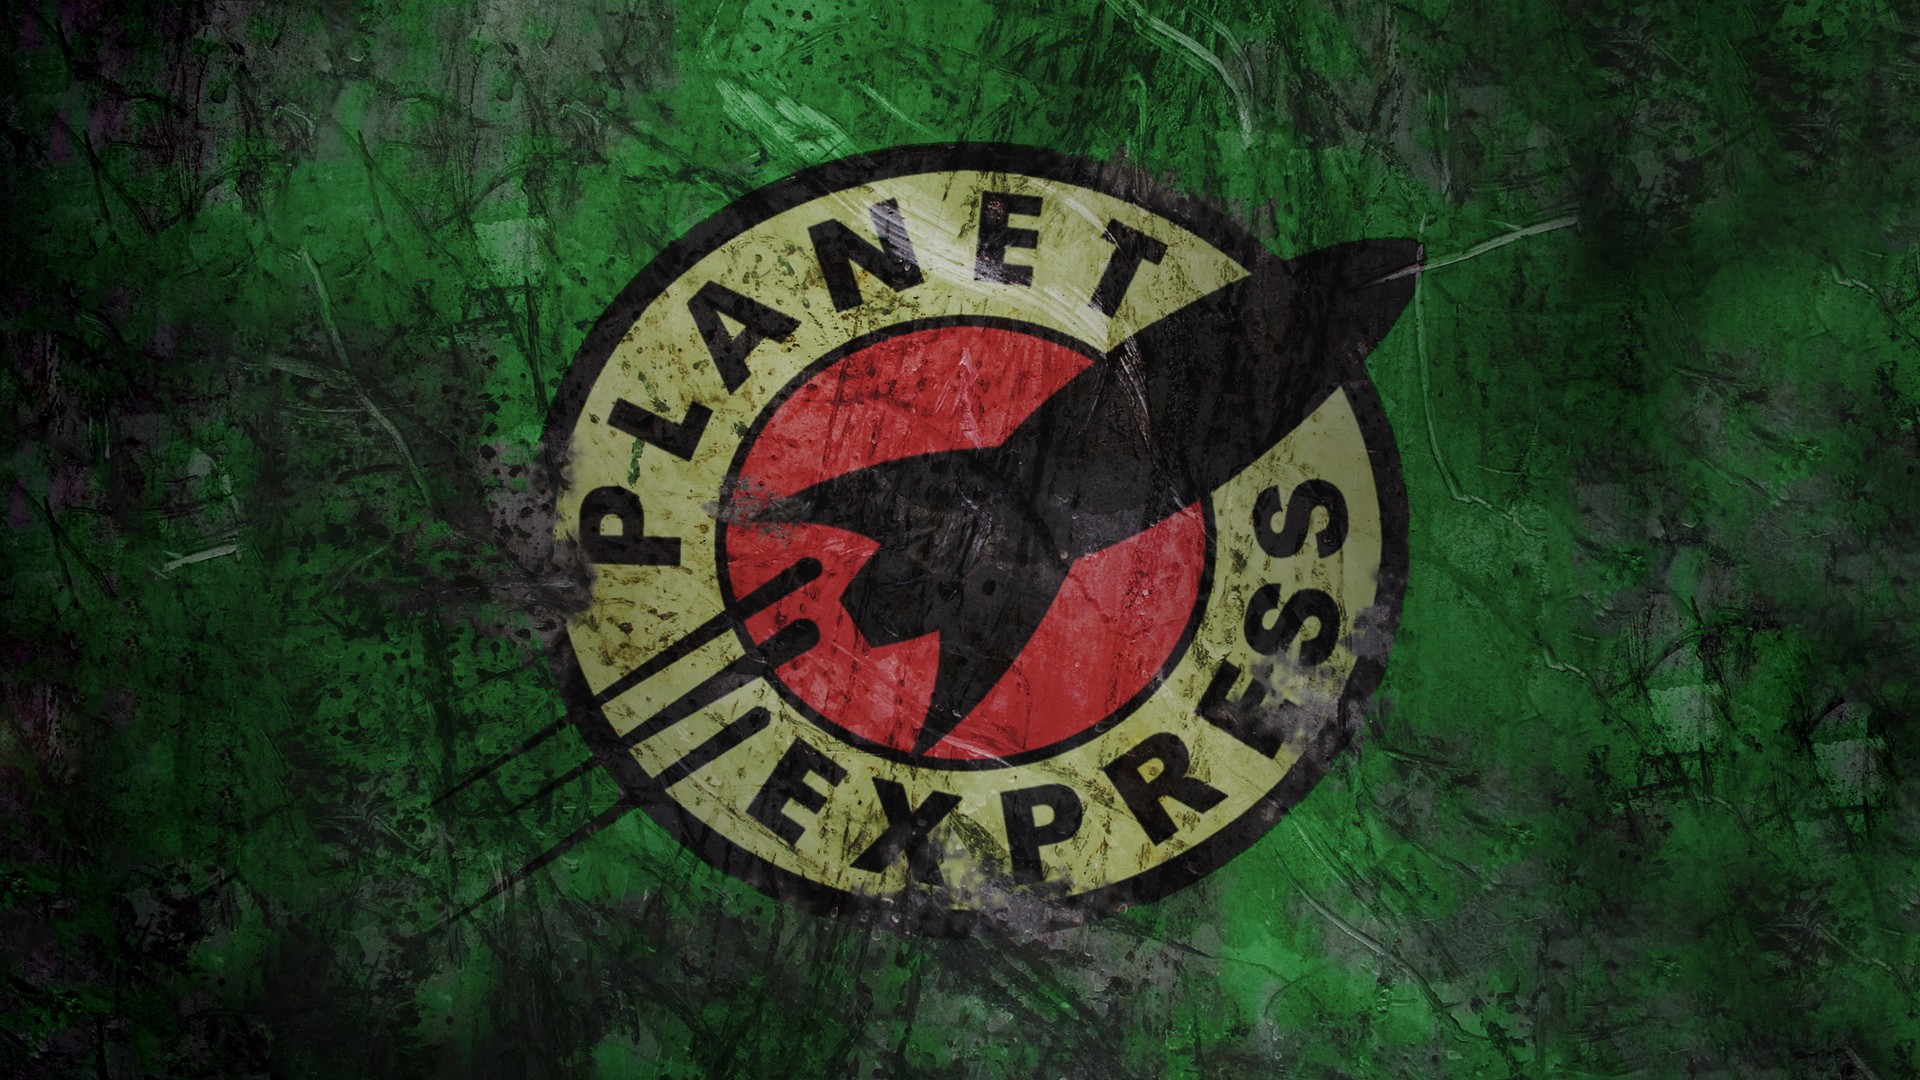 planet express wallpaper,green,logo,font,graphics,sign